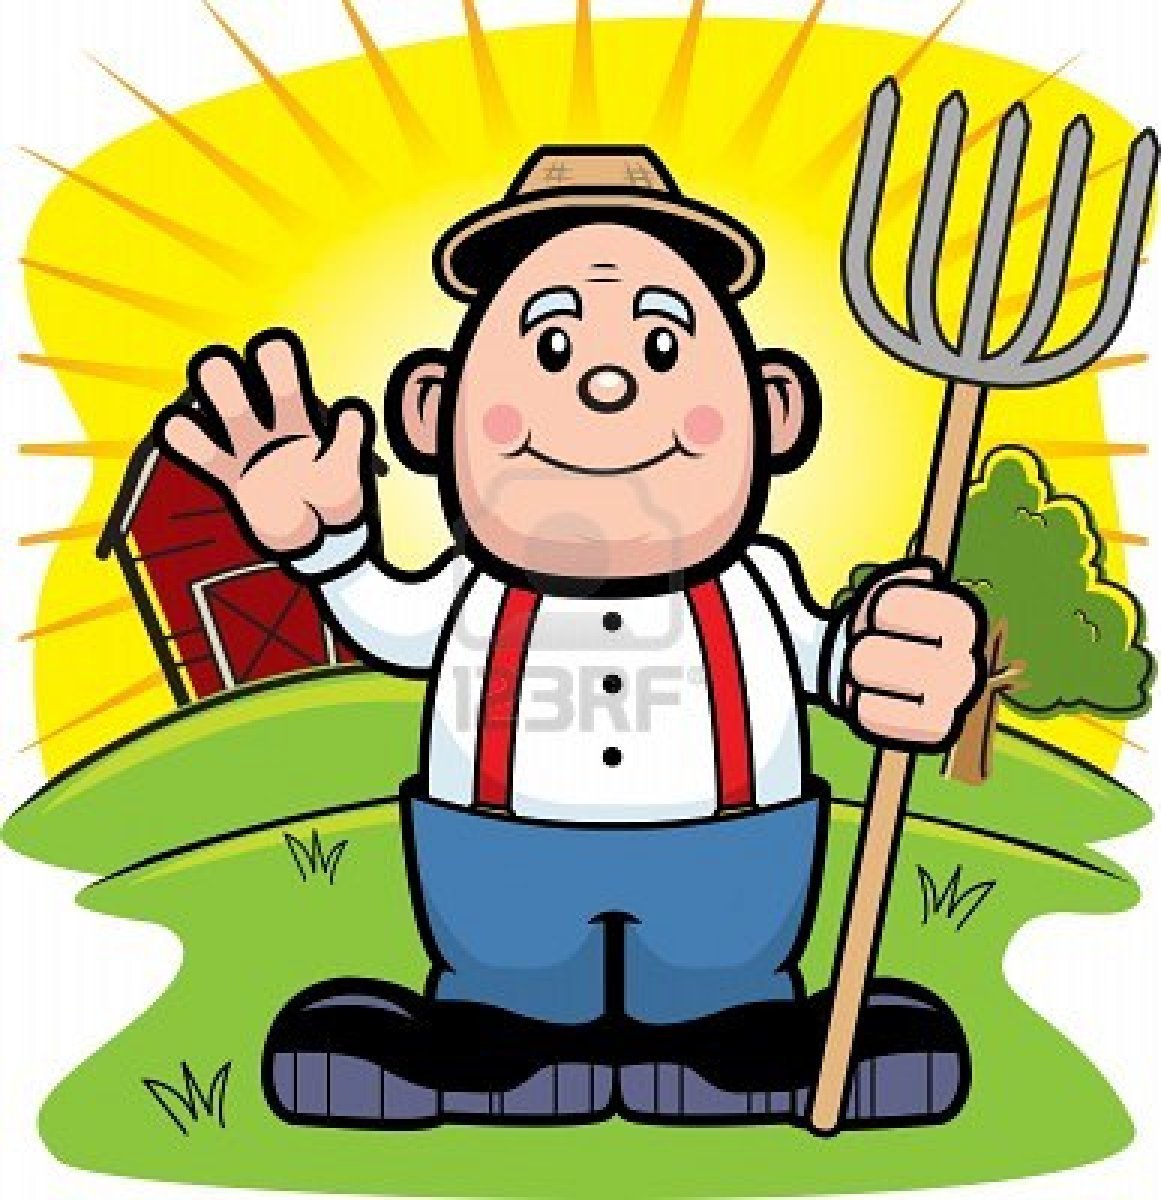 Farmer Cartoon Images | Free Download Clip Art | Free Clip Art ...